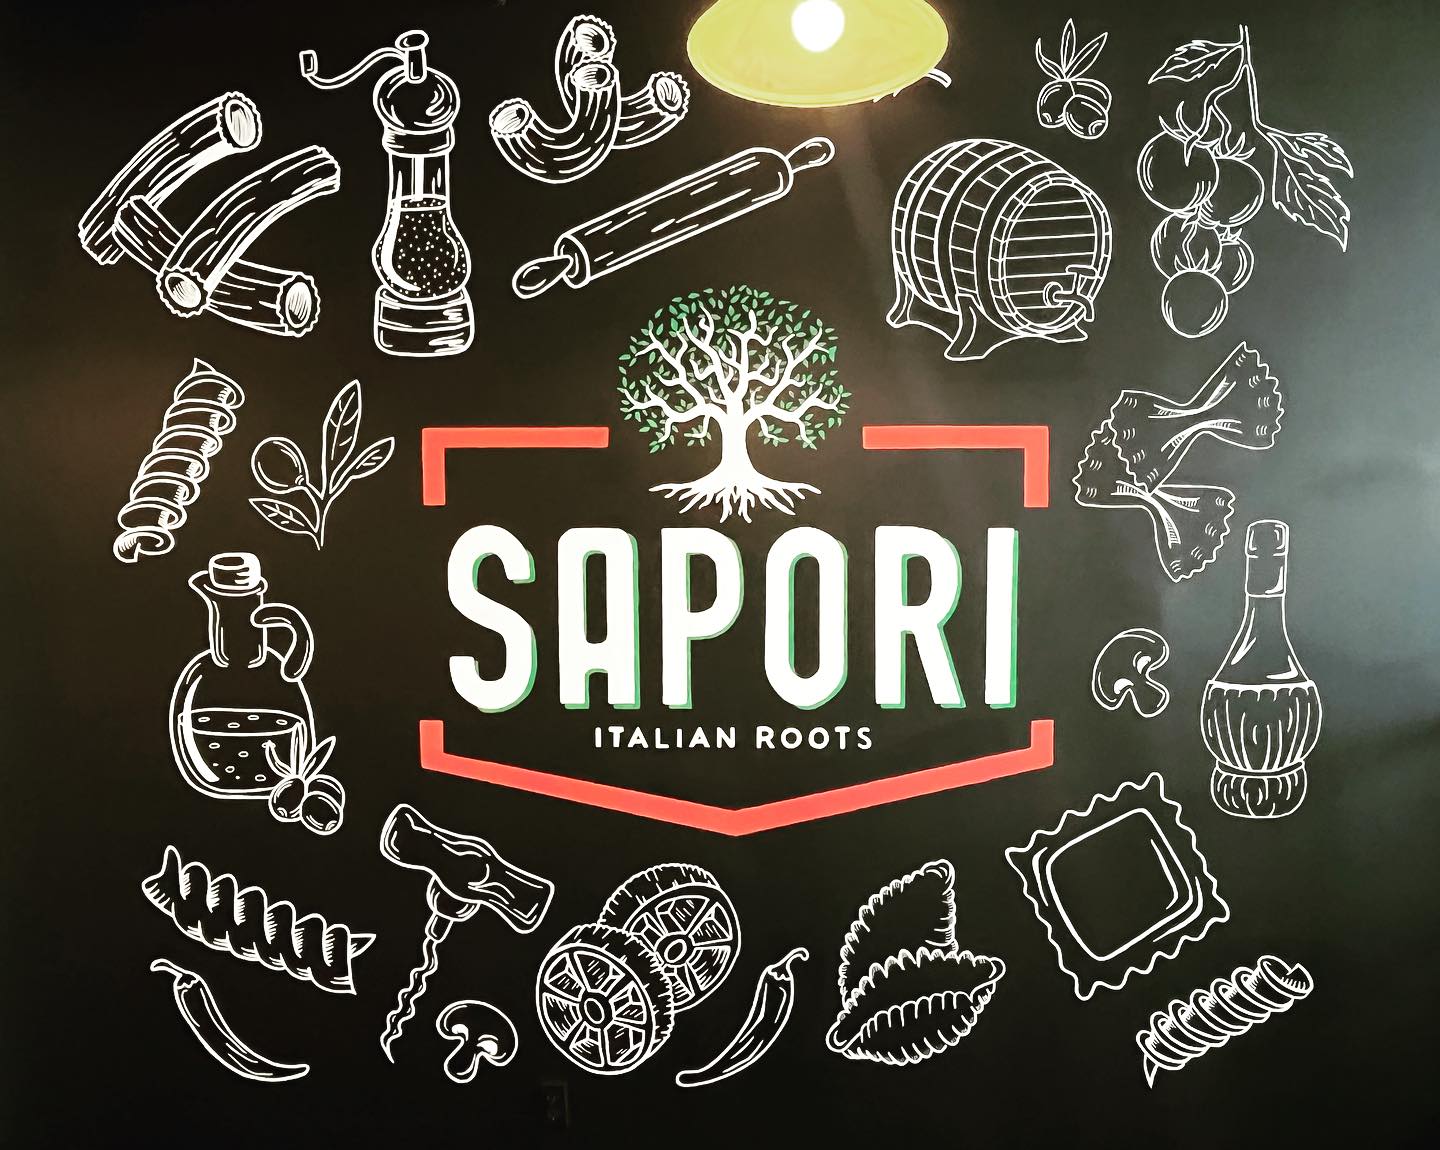 Sapori Italian Roots